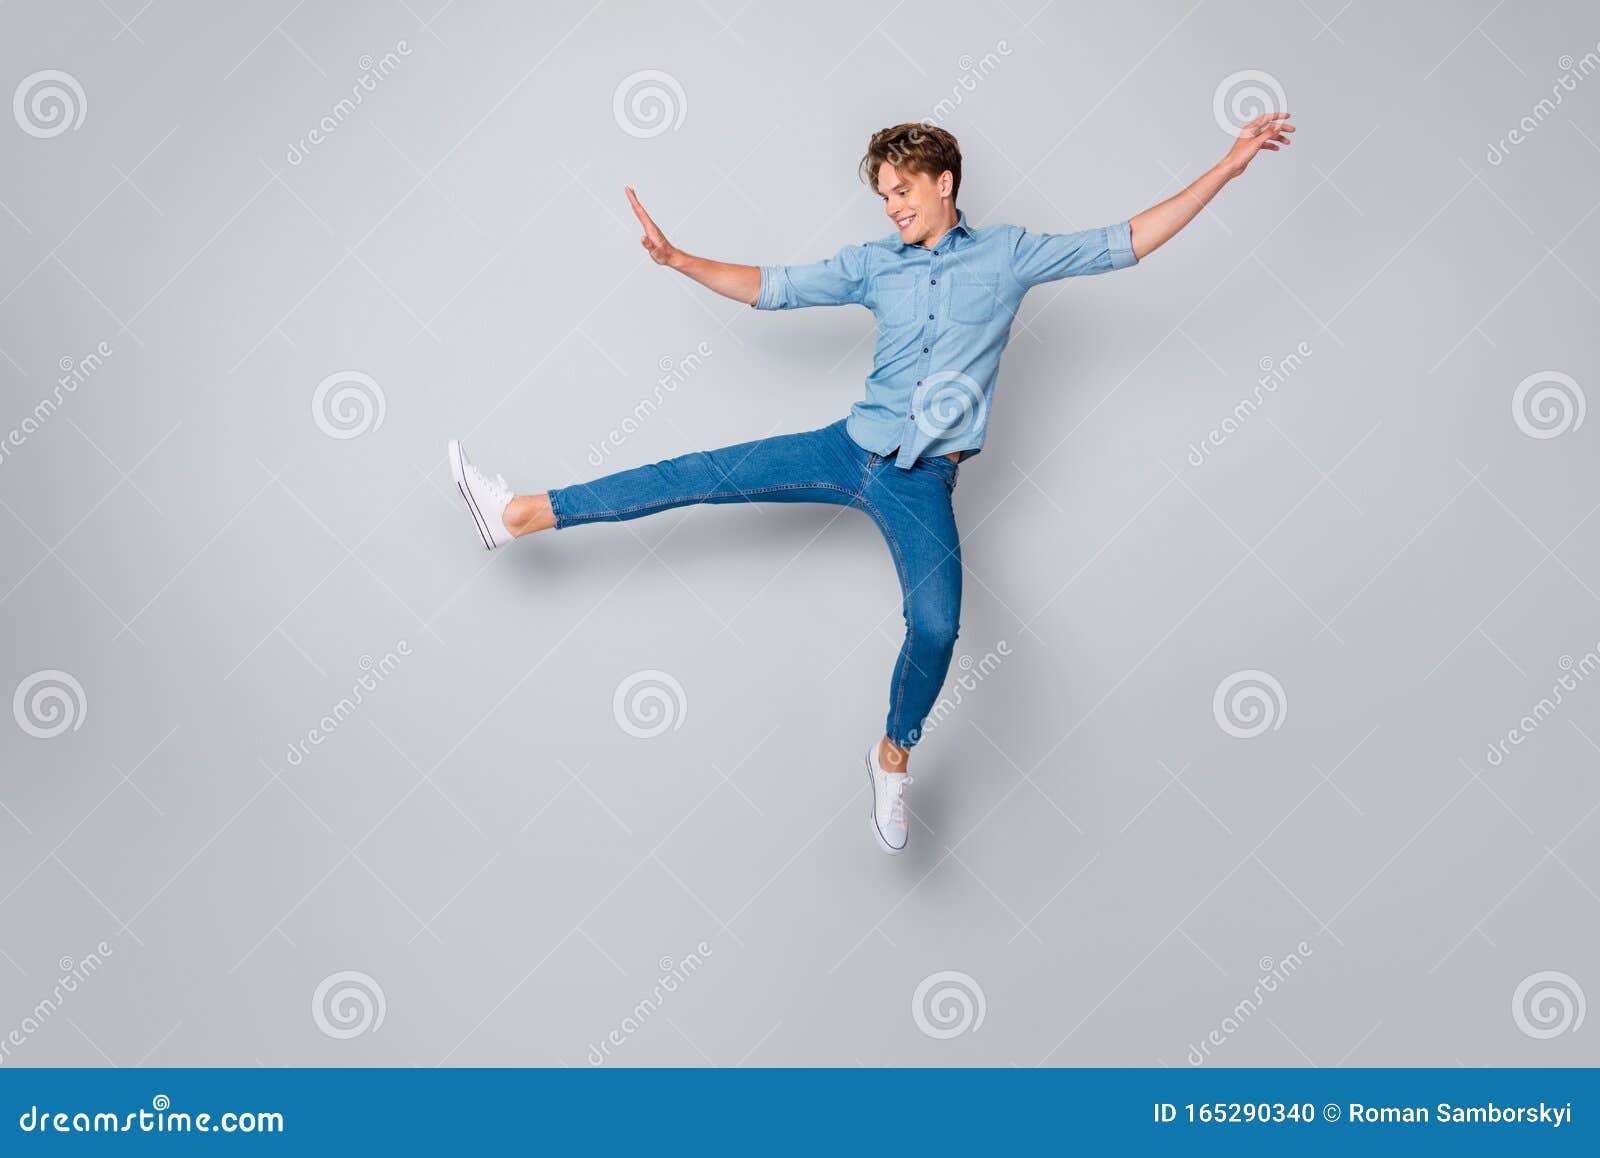 Full Length Photo of Cheerful Candid Man Jump Raise Hands Legs Imagine ...